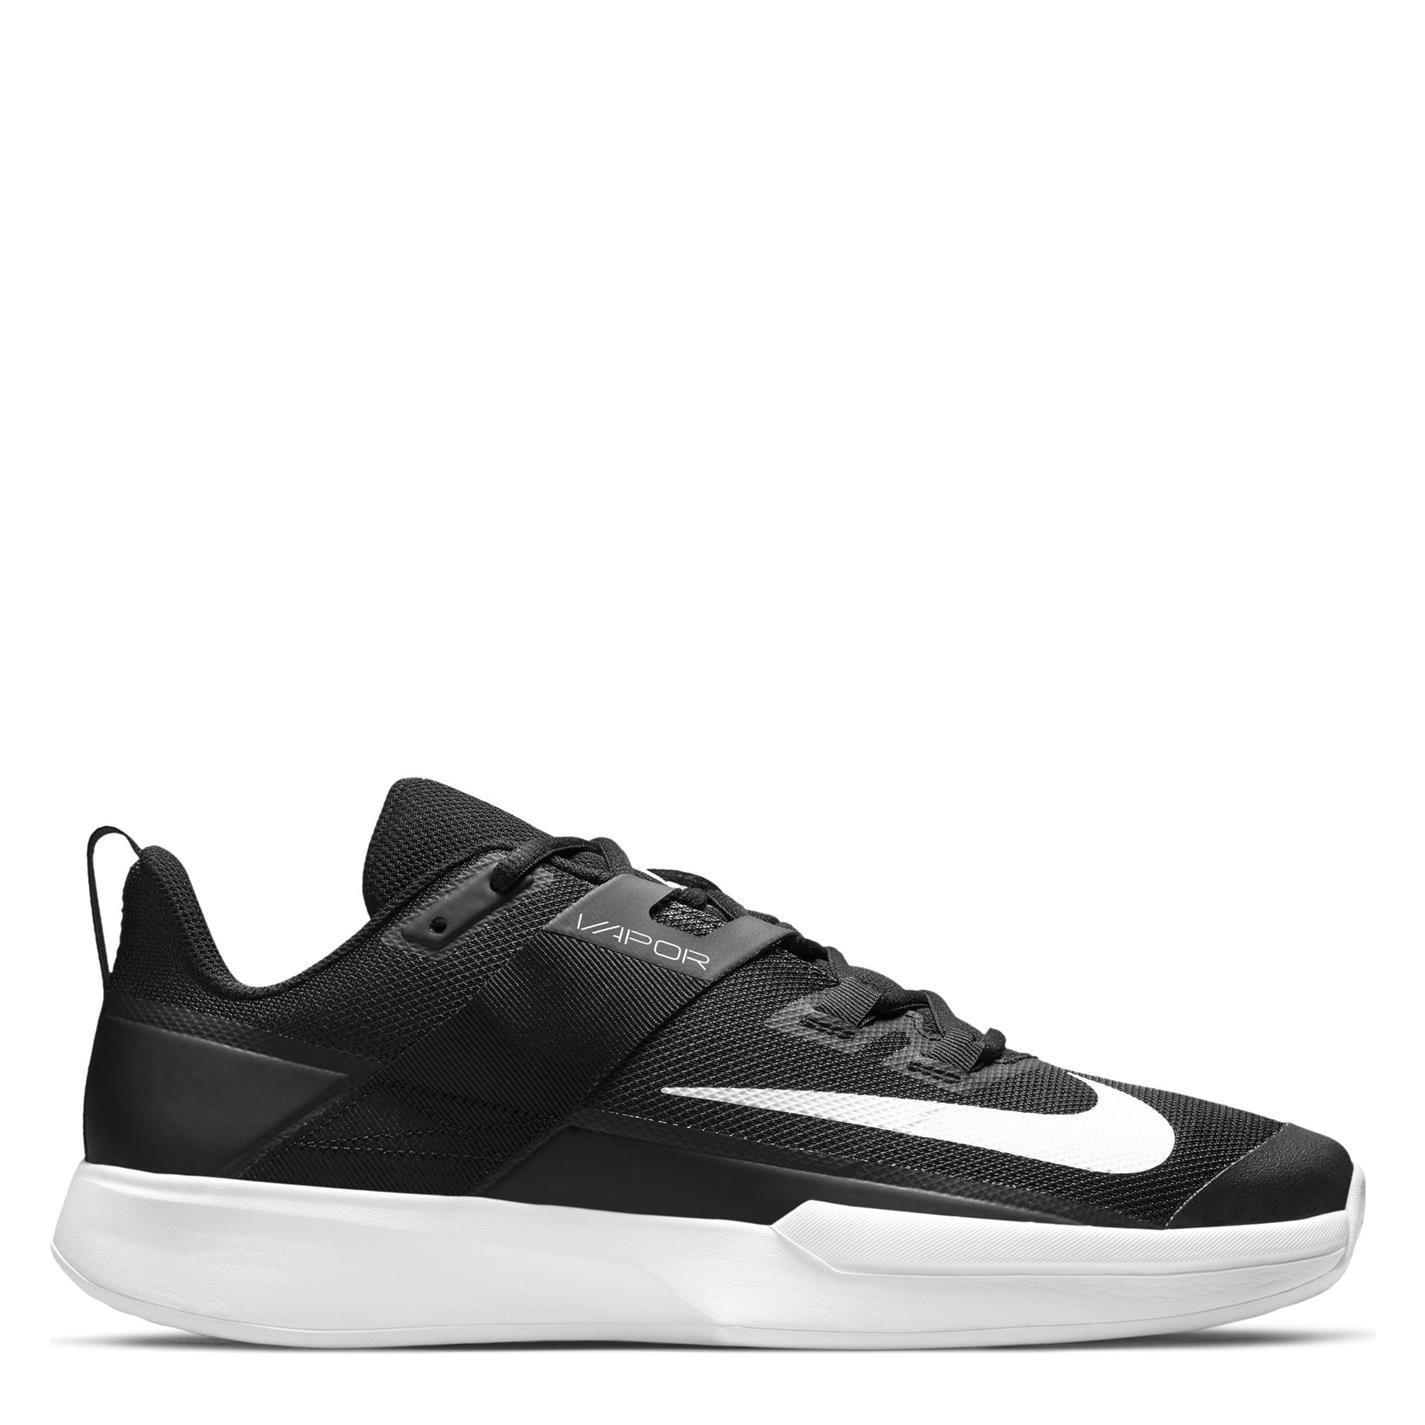 Adidasi de Tenis Nike Court Vapor Lite Hard Court pentru Barbati negru alb